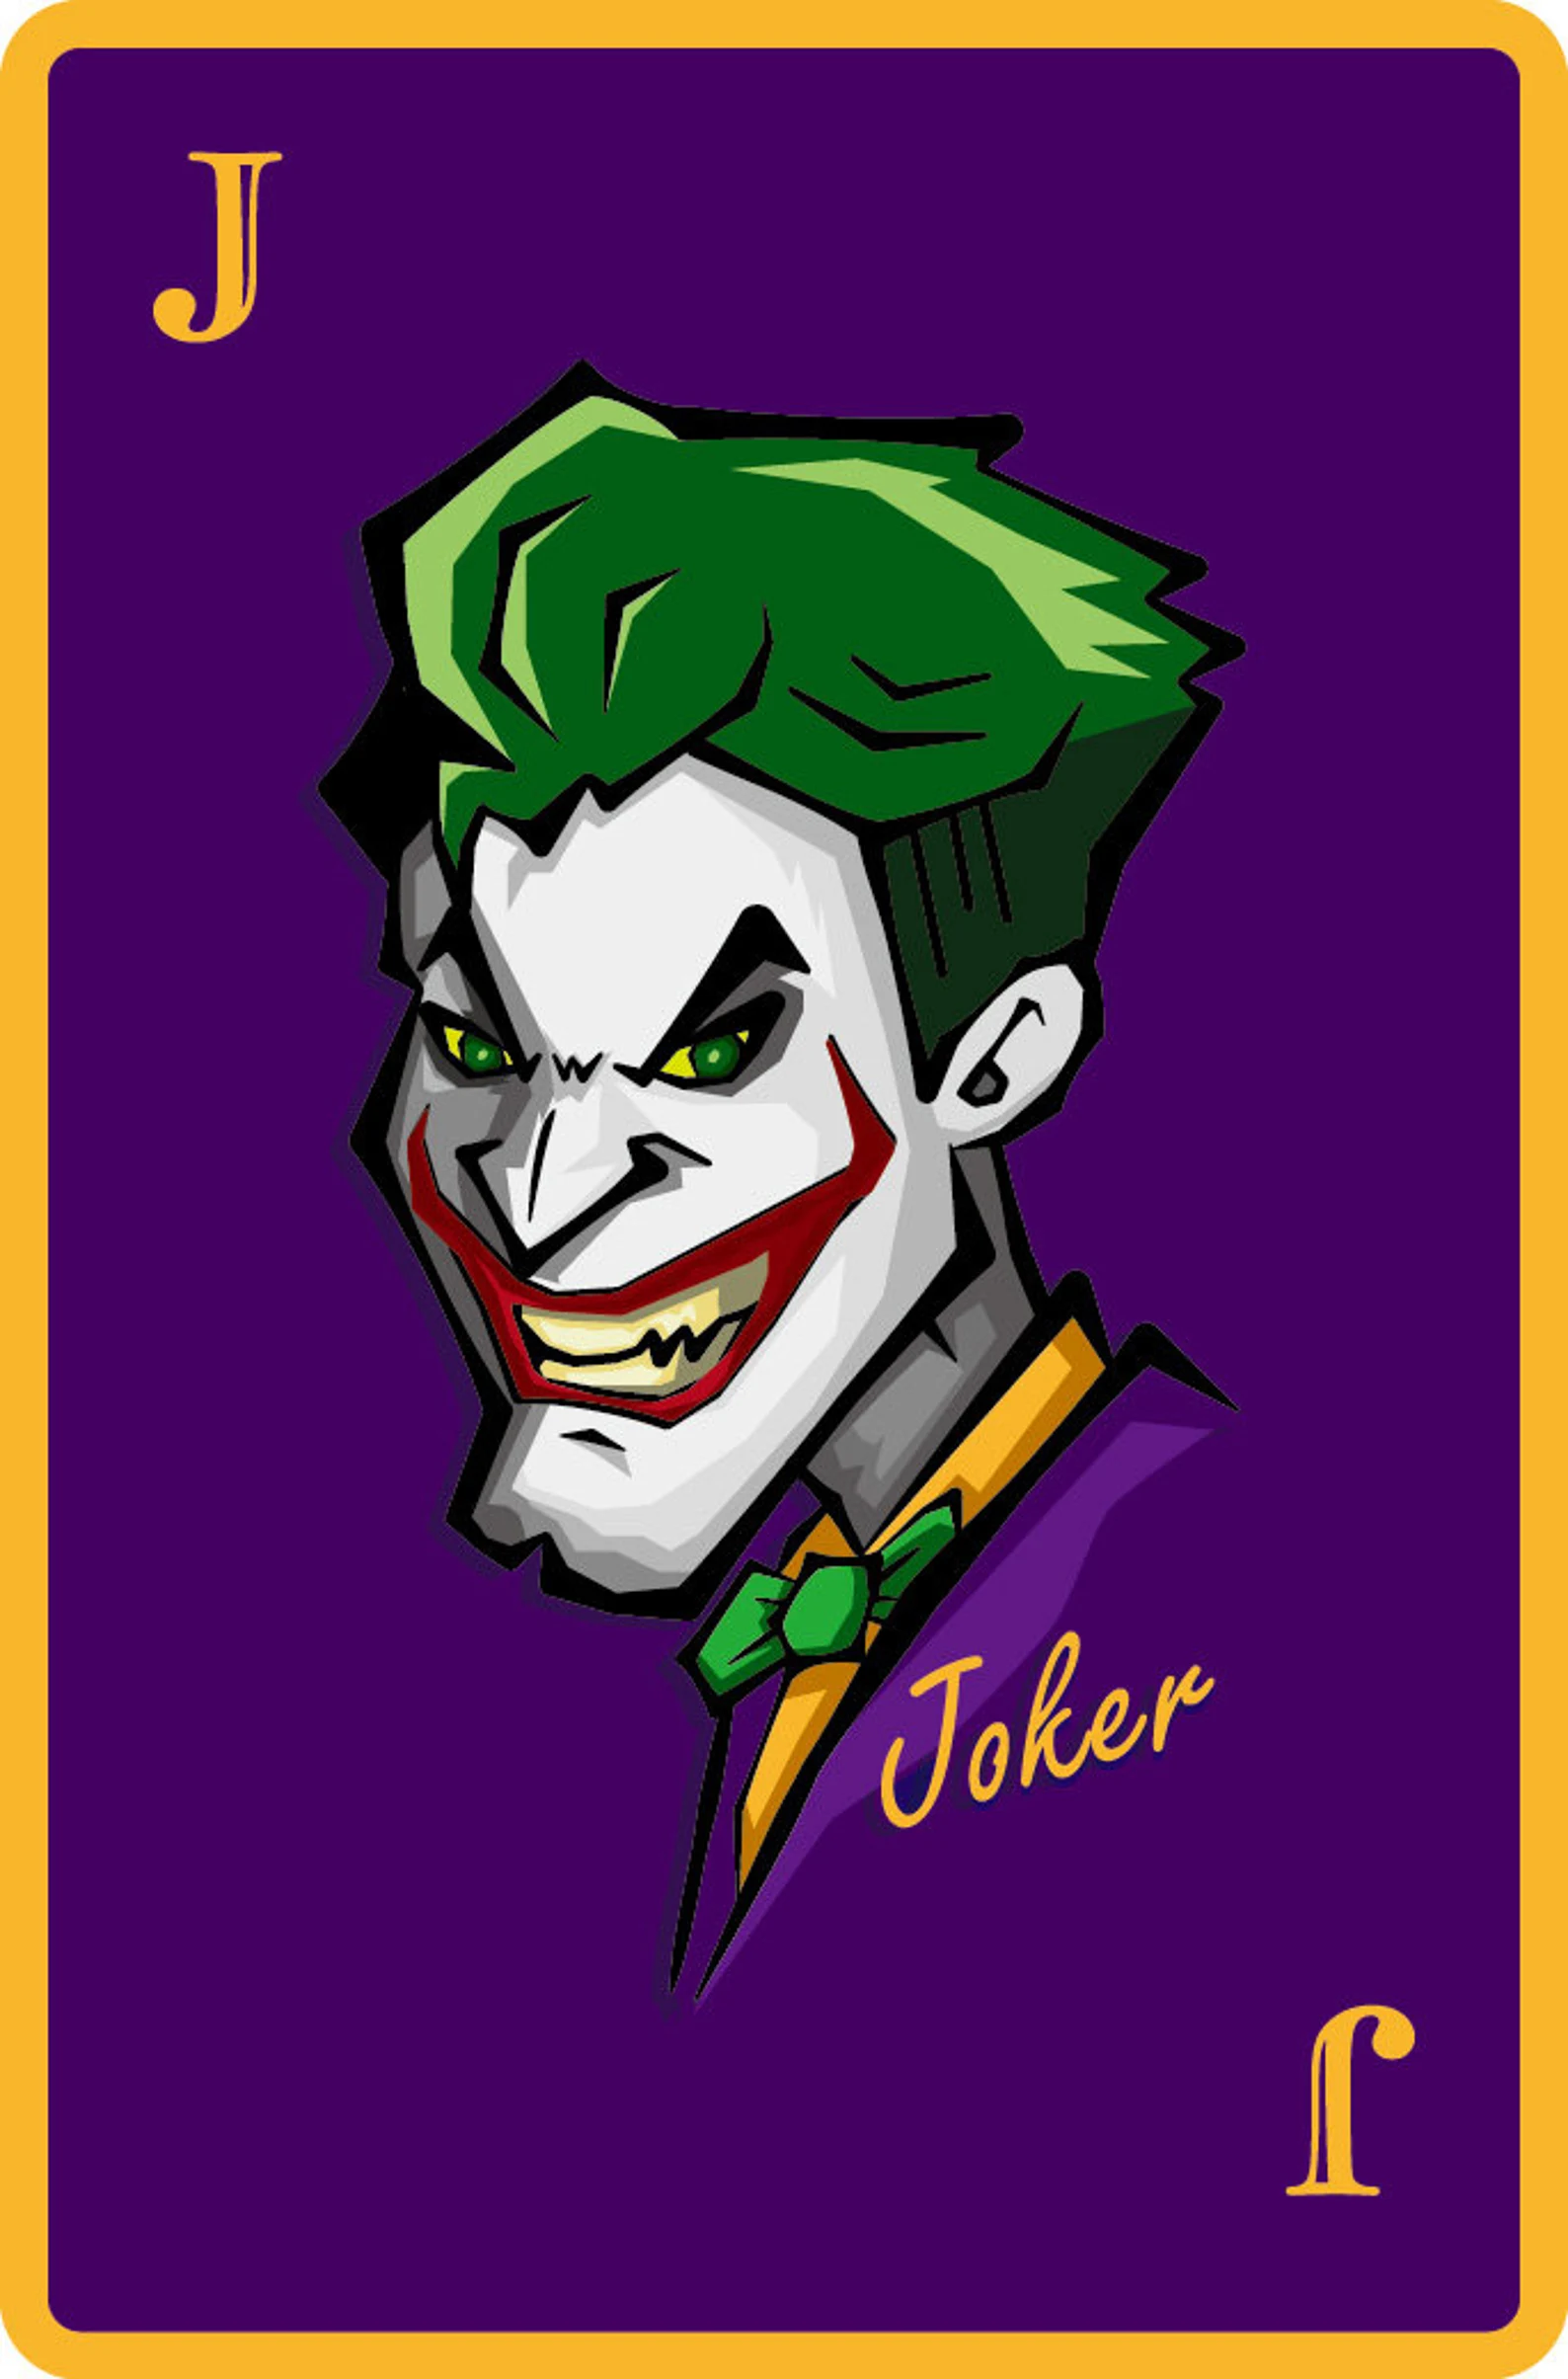 Purple background with green hair Joker.